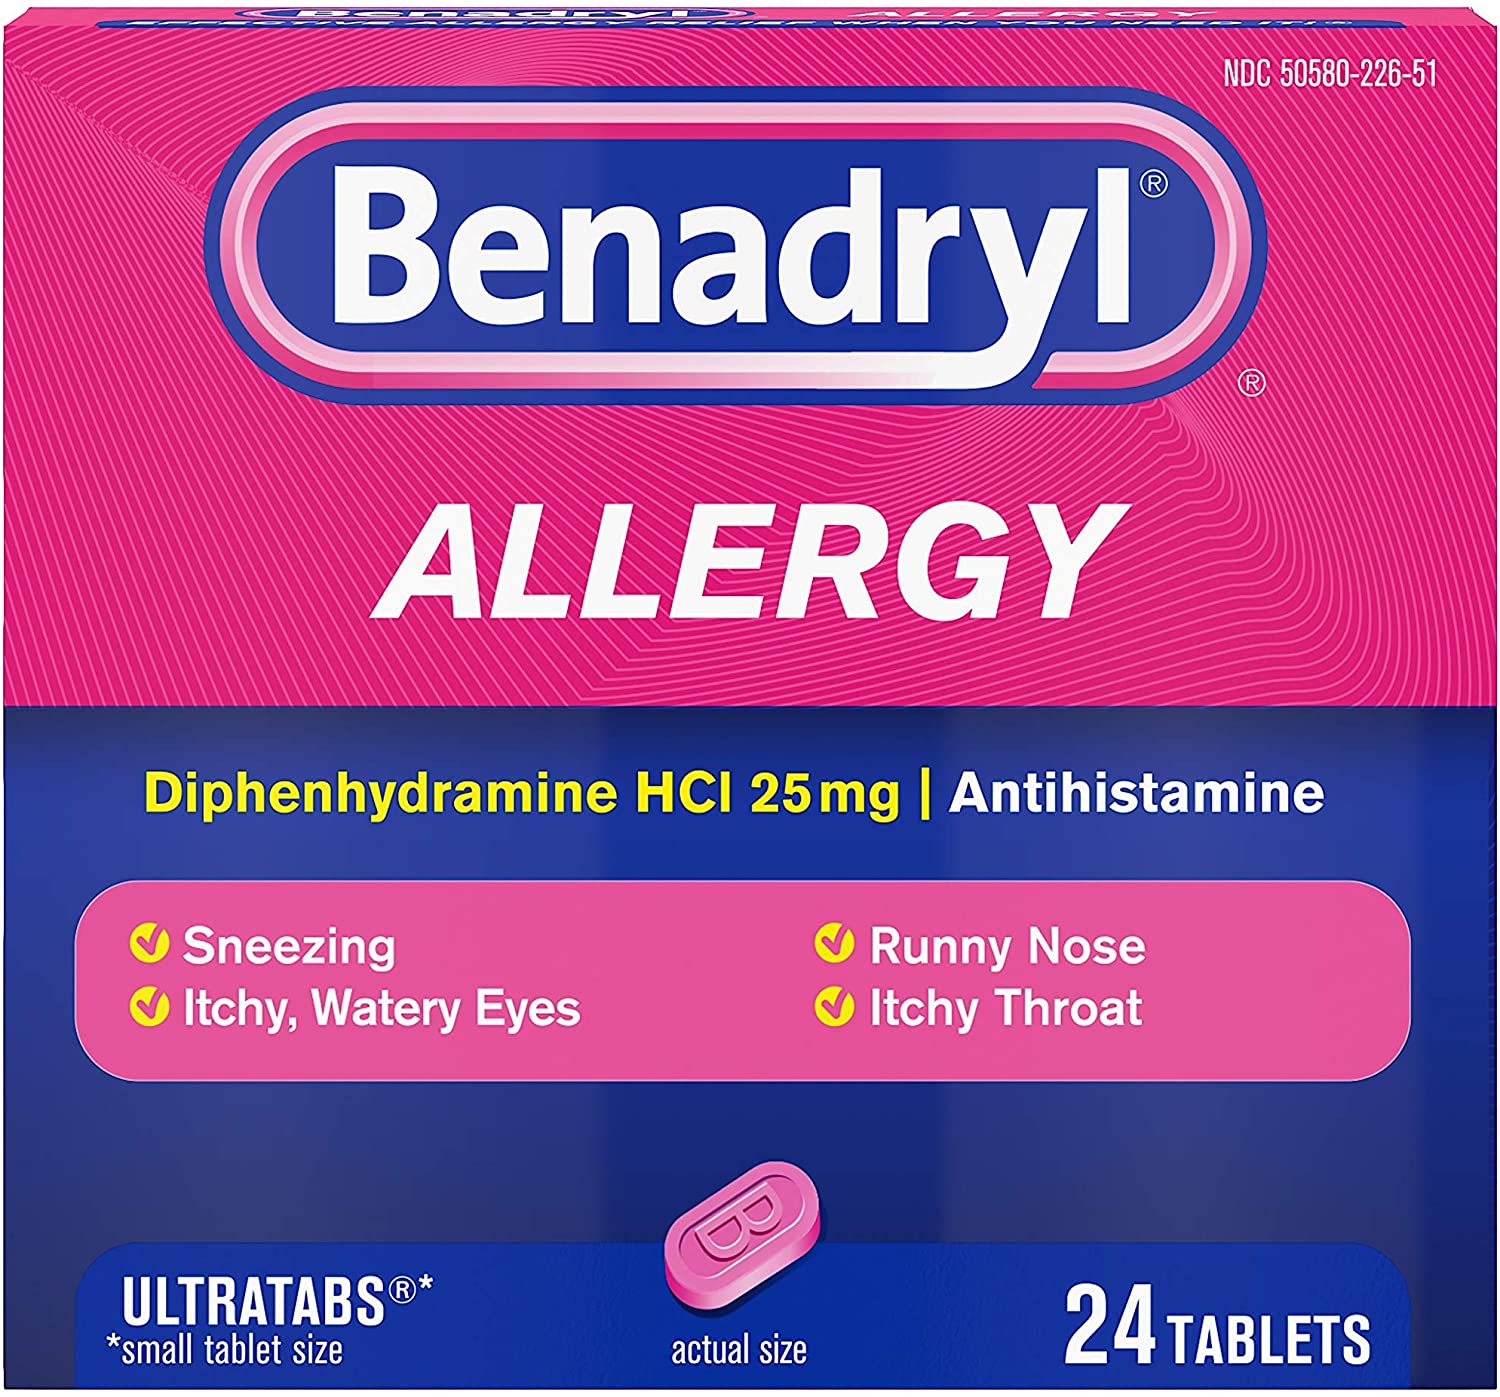 Benadryl Allergy Antihistamine UltraTabs Tablets - 24ct/24pk